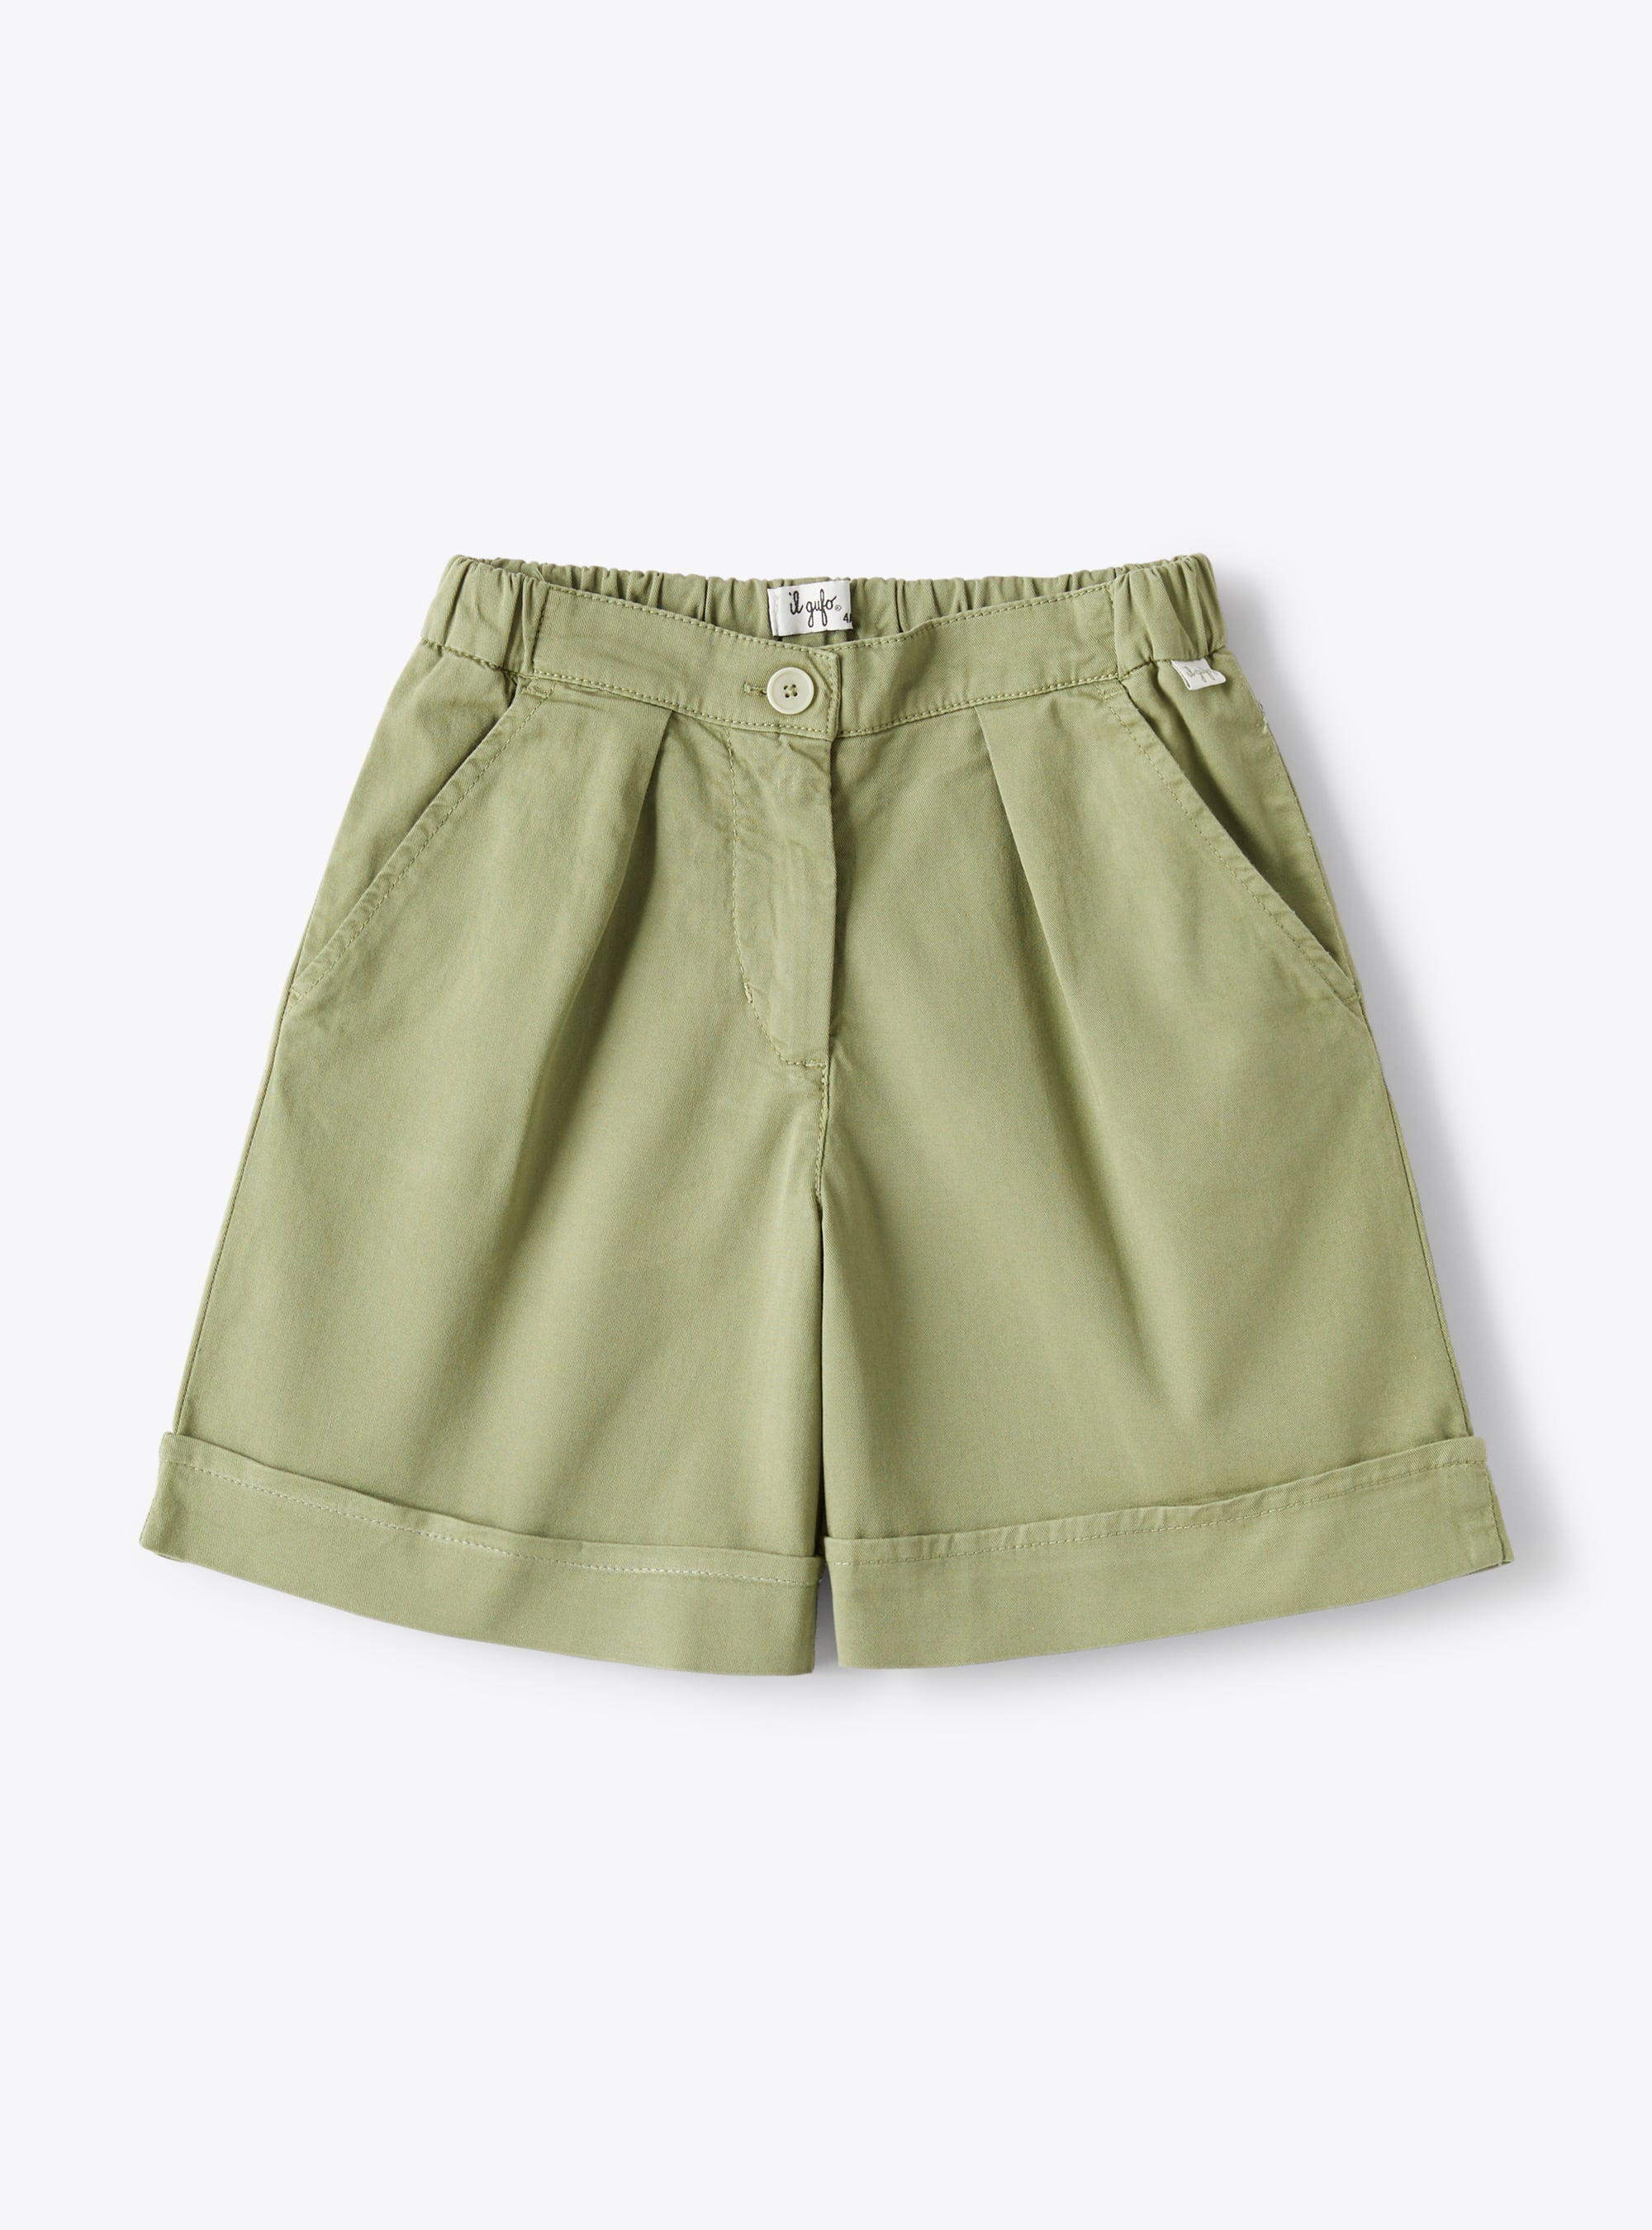 Bermuda shorts in sage-green stretch gabardine - Green | Il Gufo